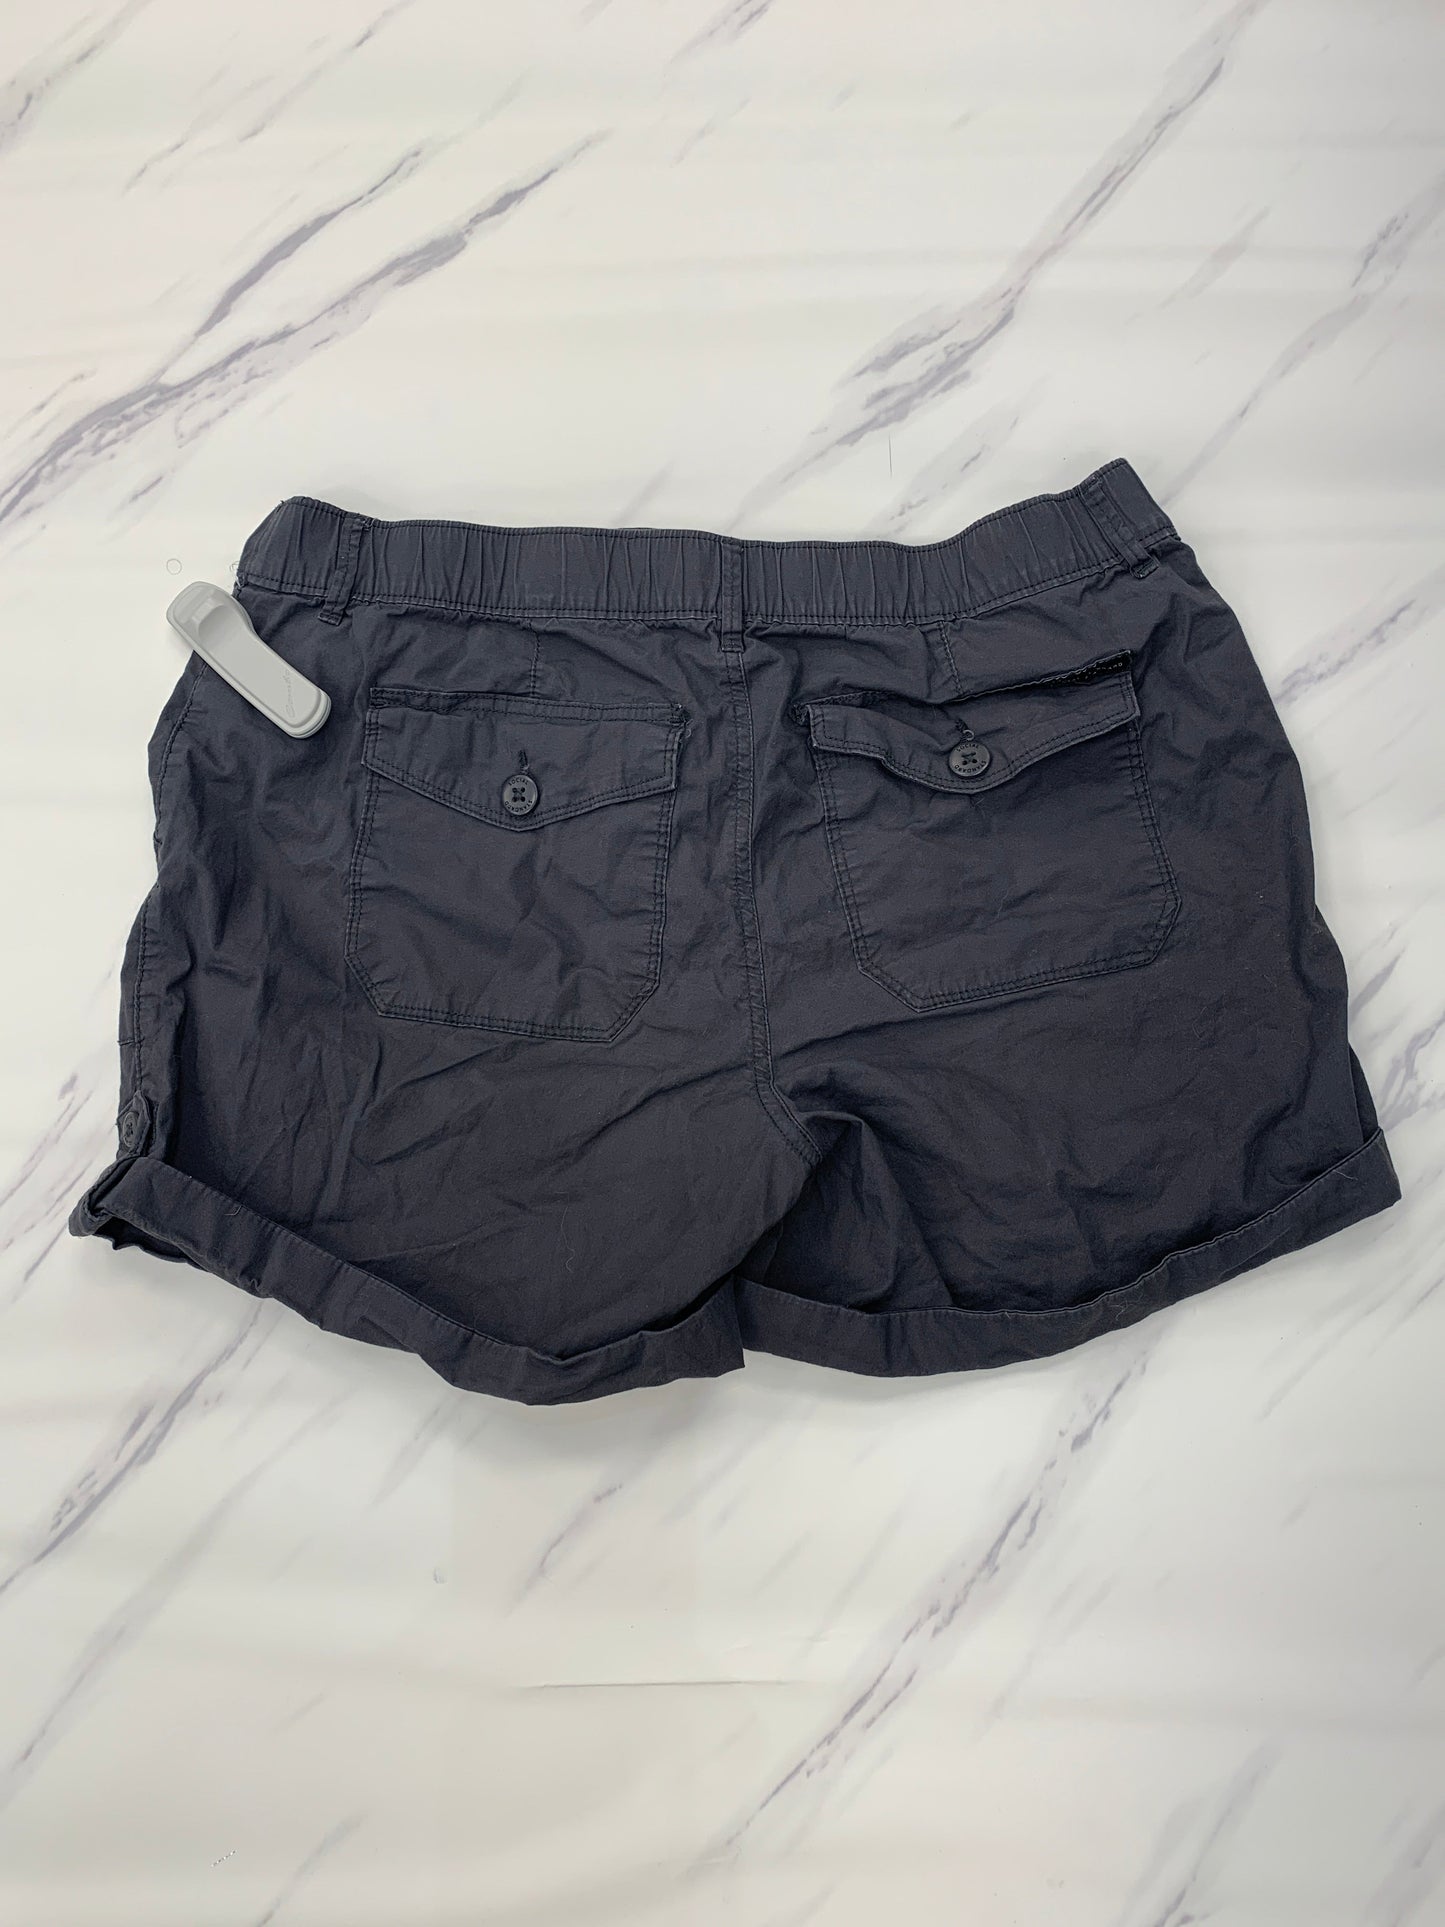 Shorts By Sanctuary  Size: Xl